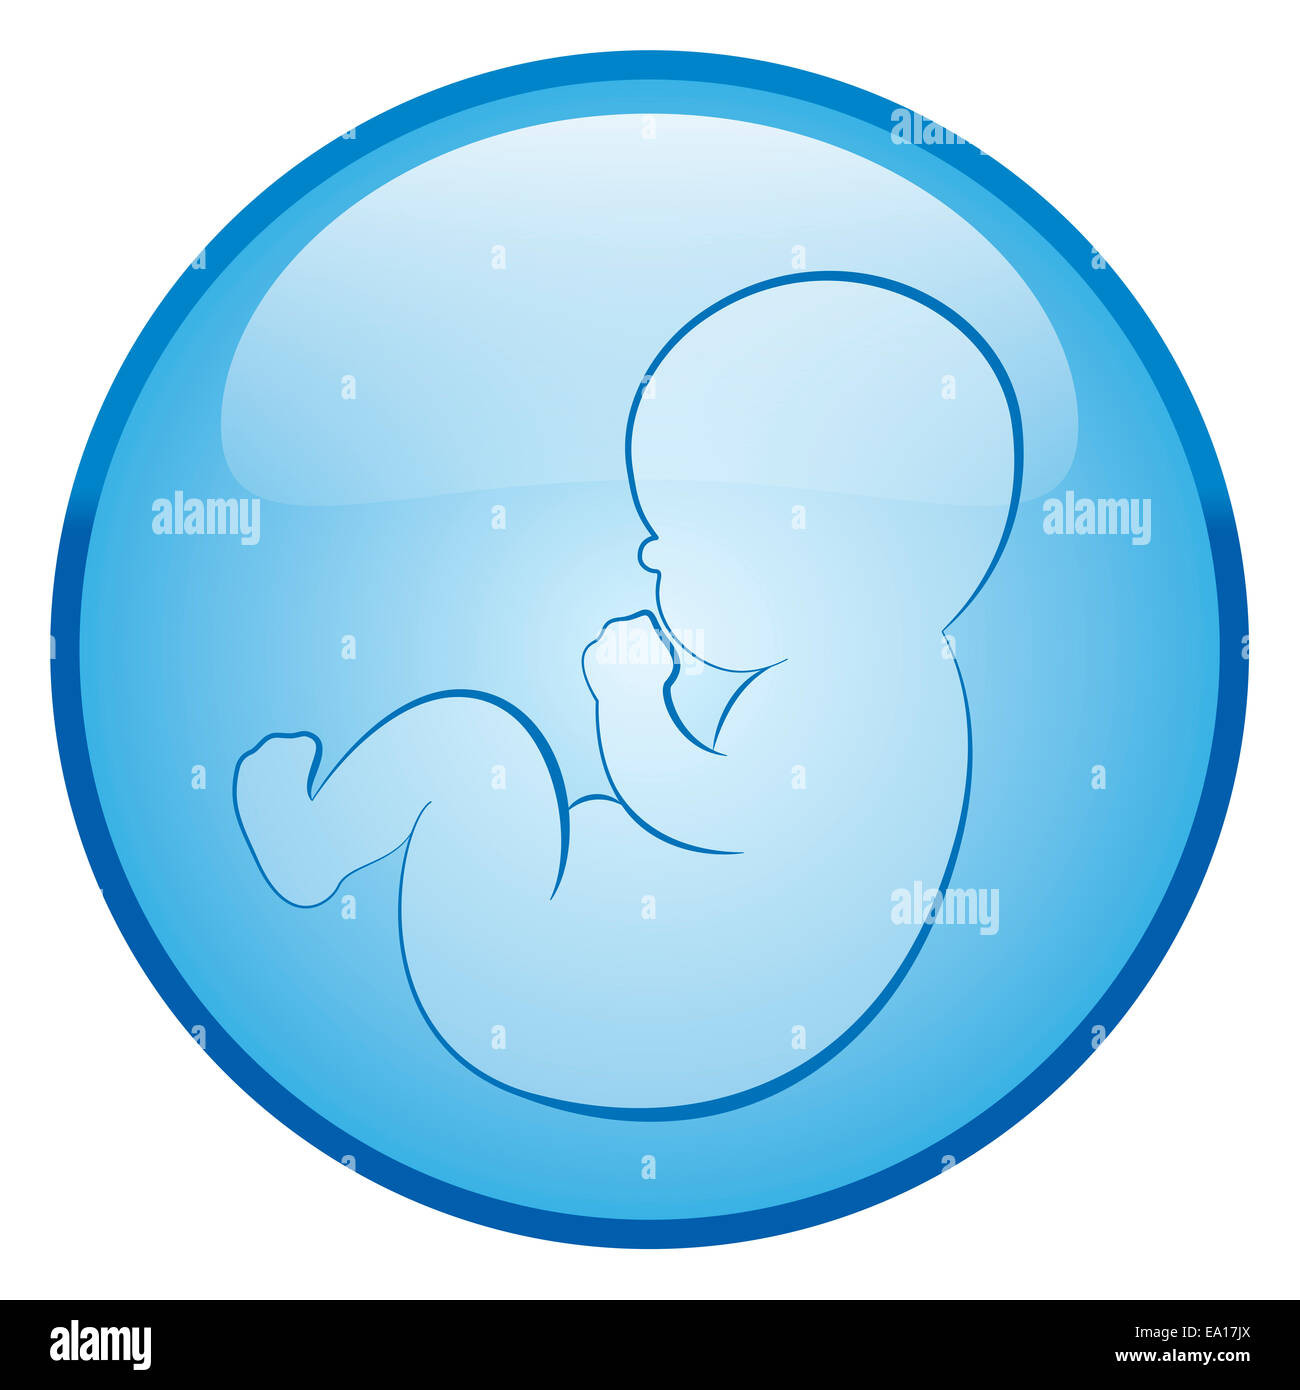 Baby boy symbol on a round blue button. Stock Photo